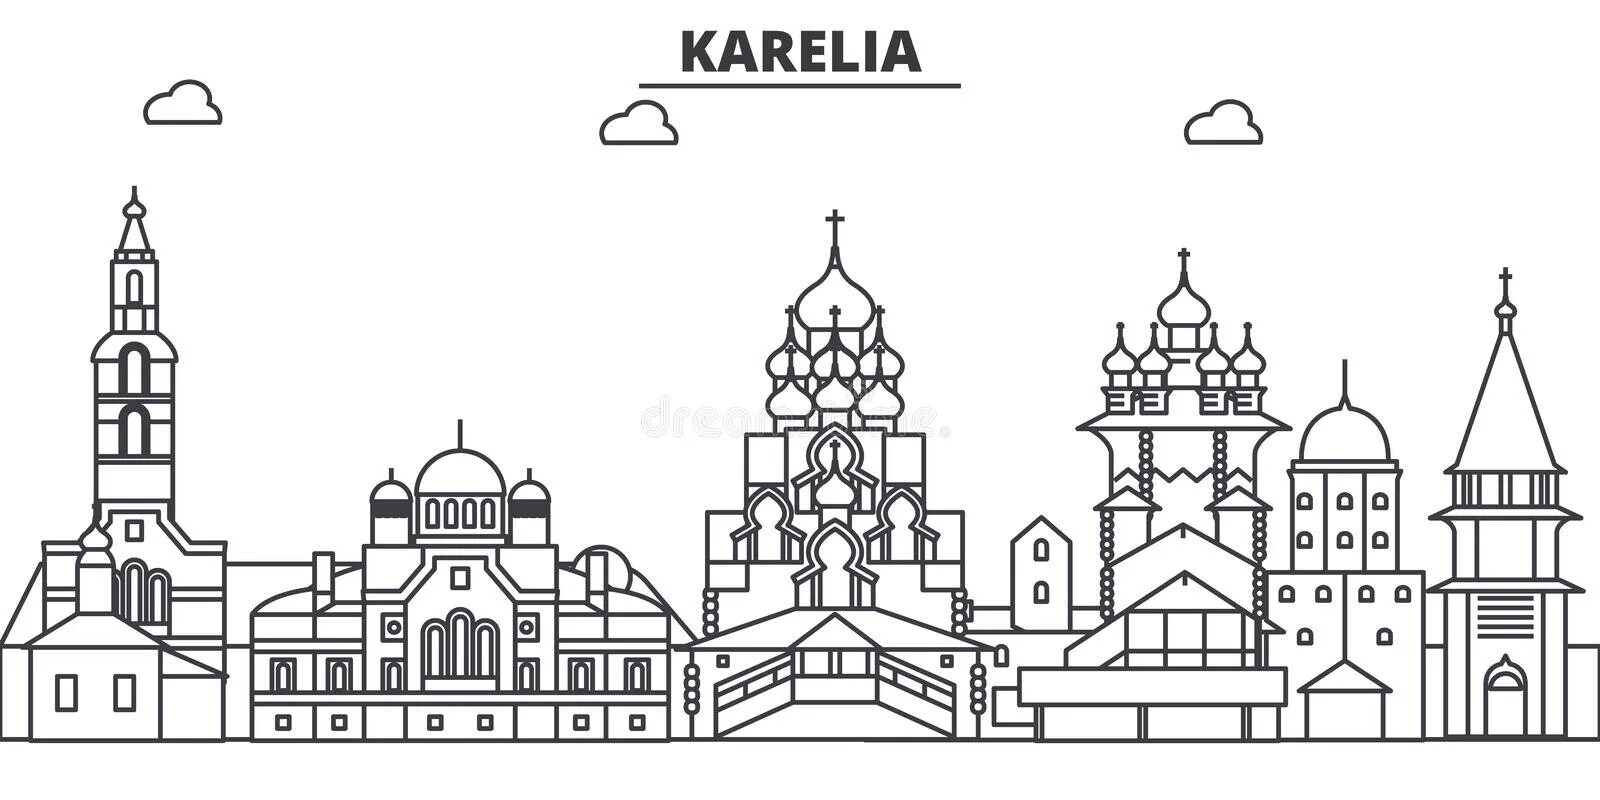 Karelia #2